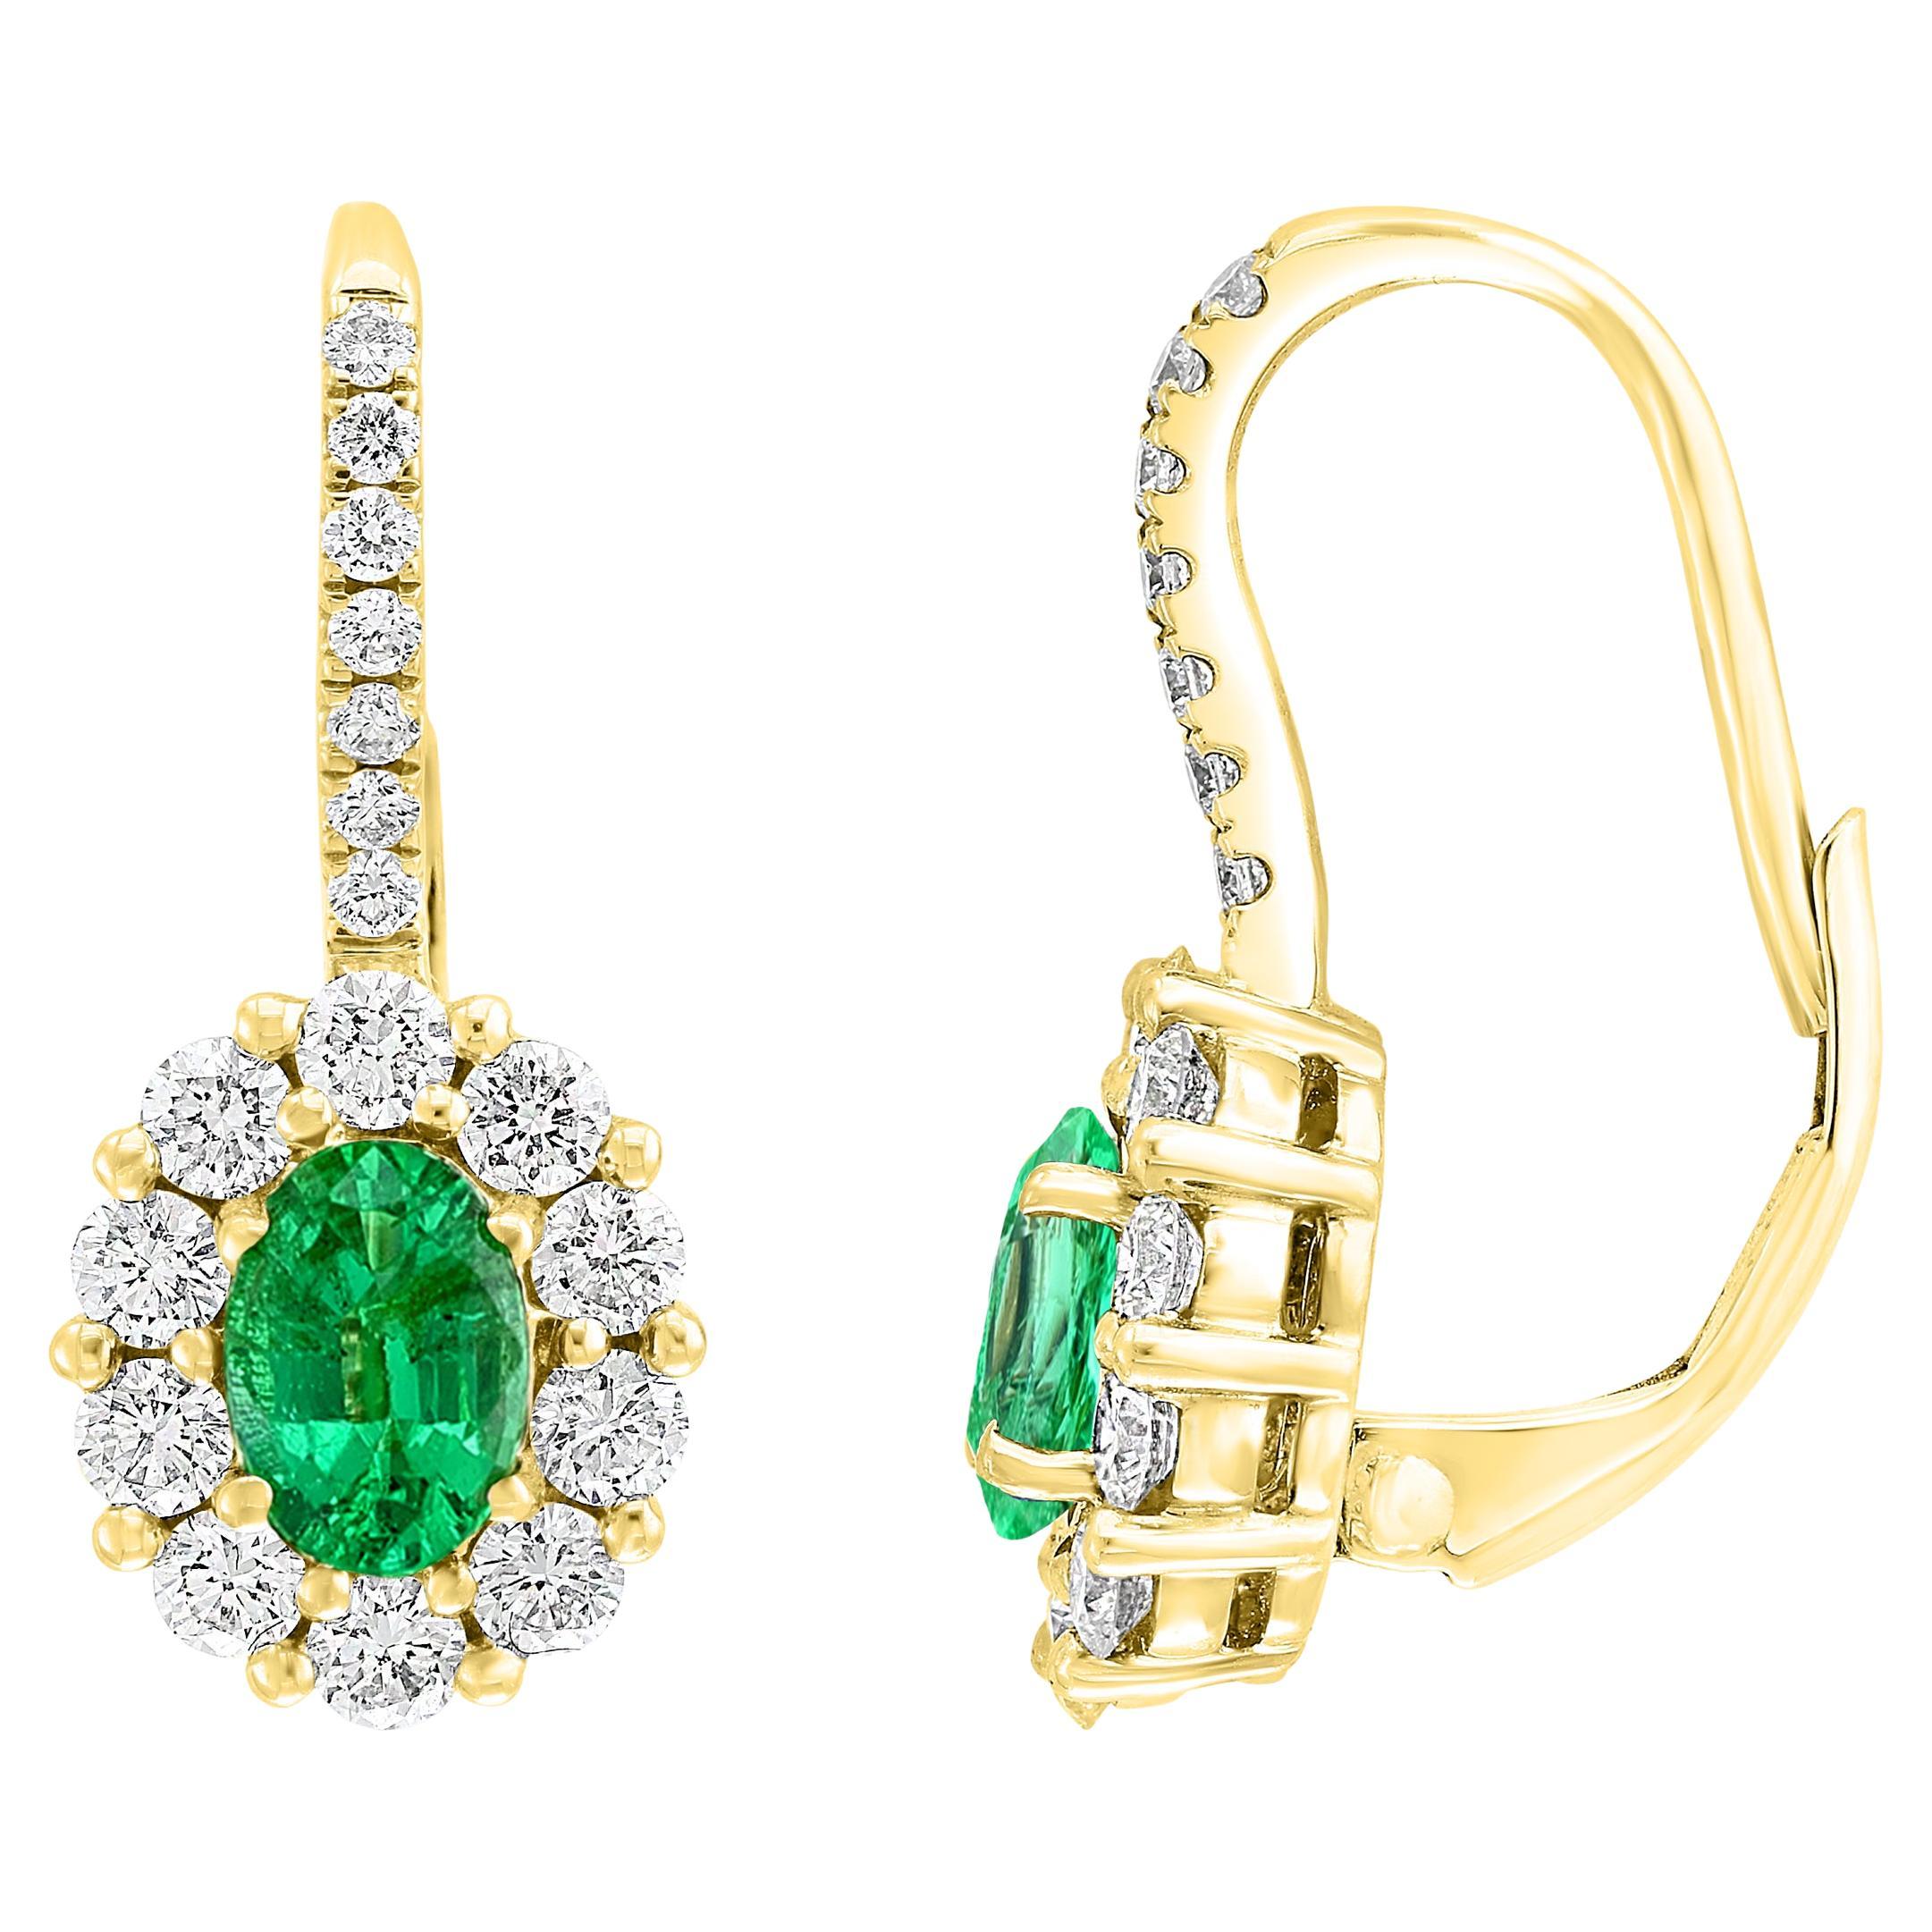 0.80 Carat Oval Cut Emerald and Diamond Earrings in 18K Yellow Gold